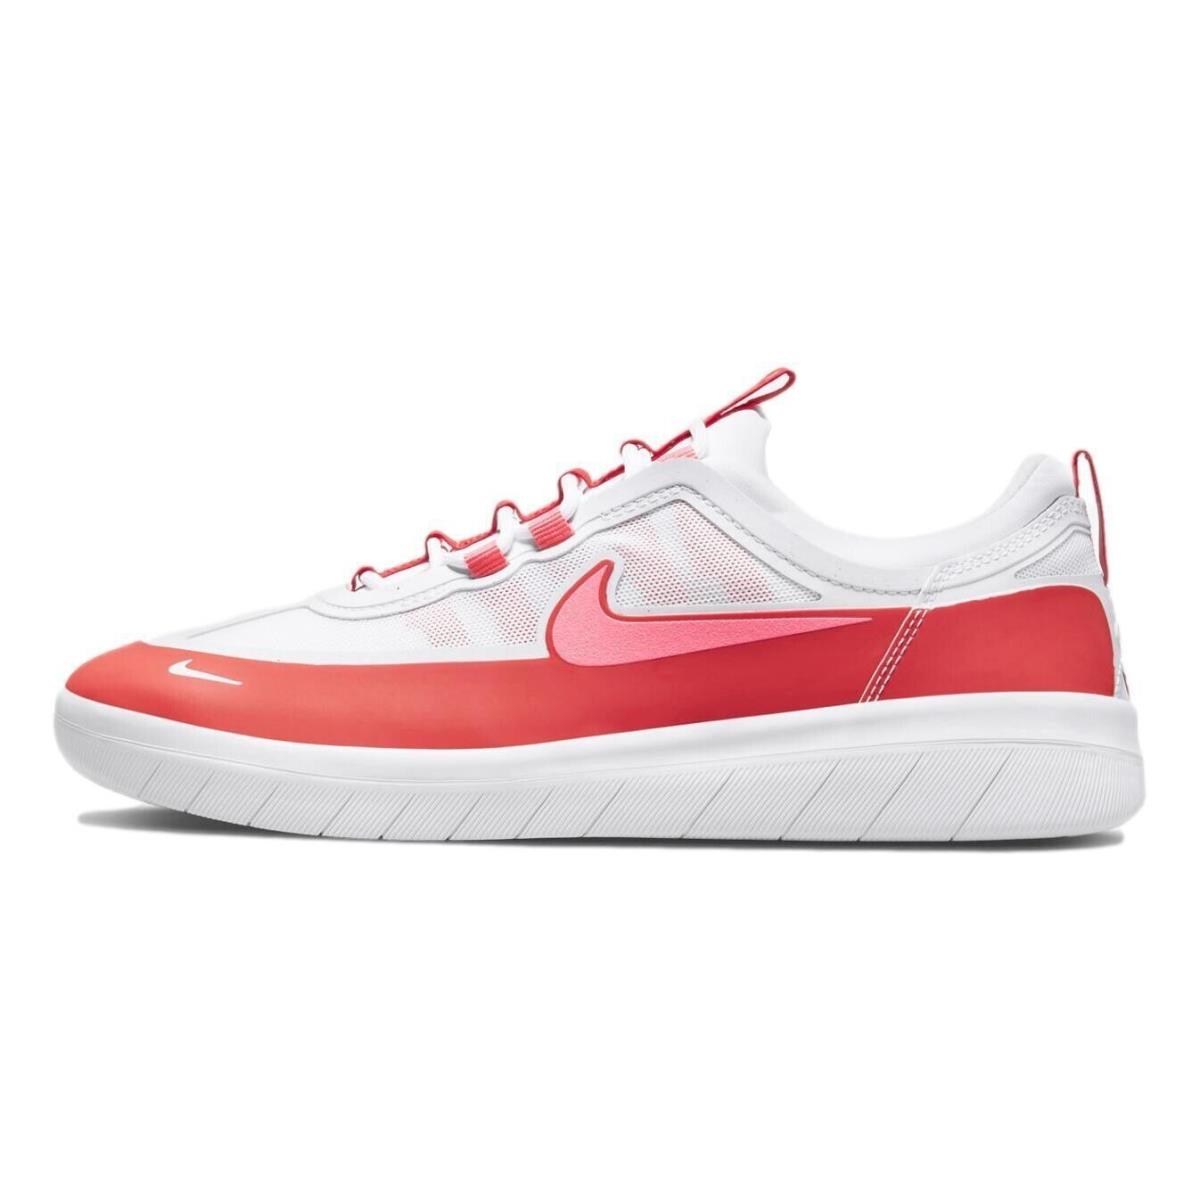 Nike SB Nyjah Free 2 Skate Board Shoes Lobster White BV2078-600 Men`s 9.5 - White